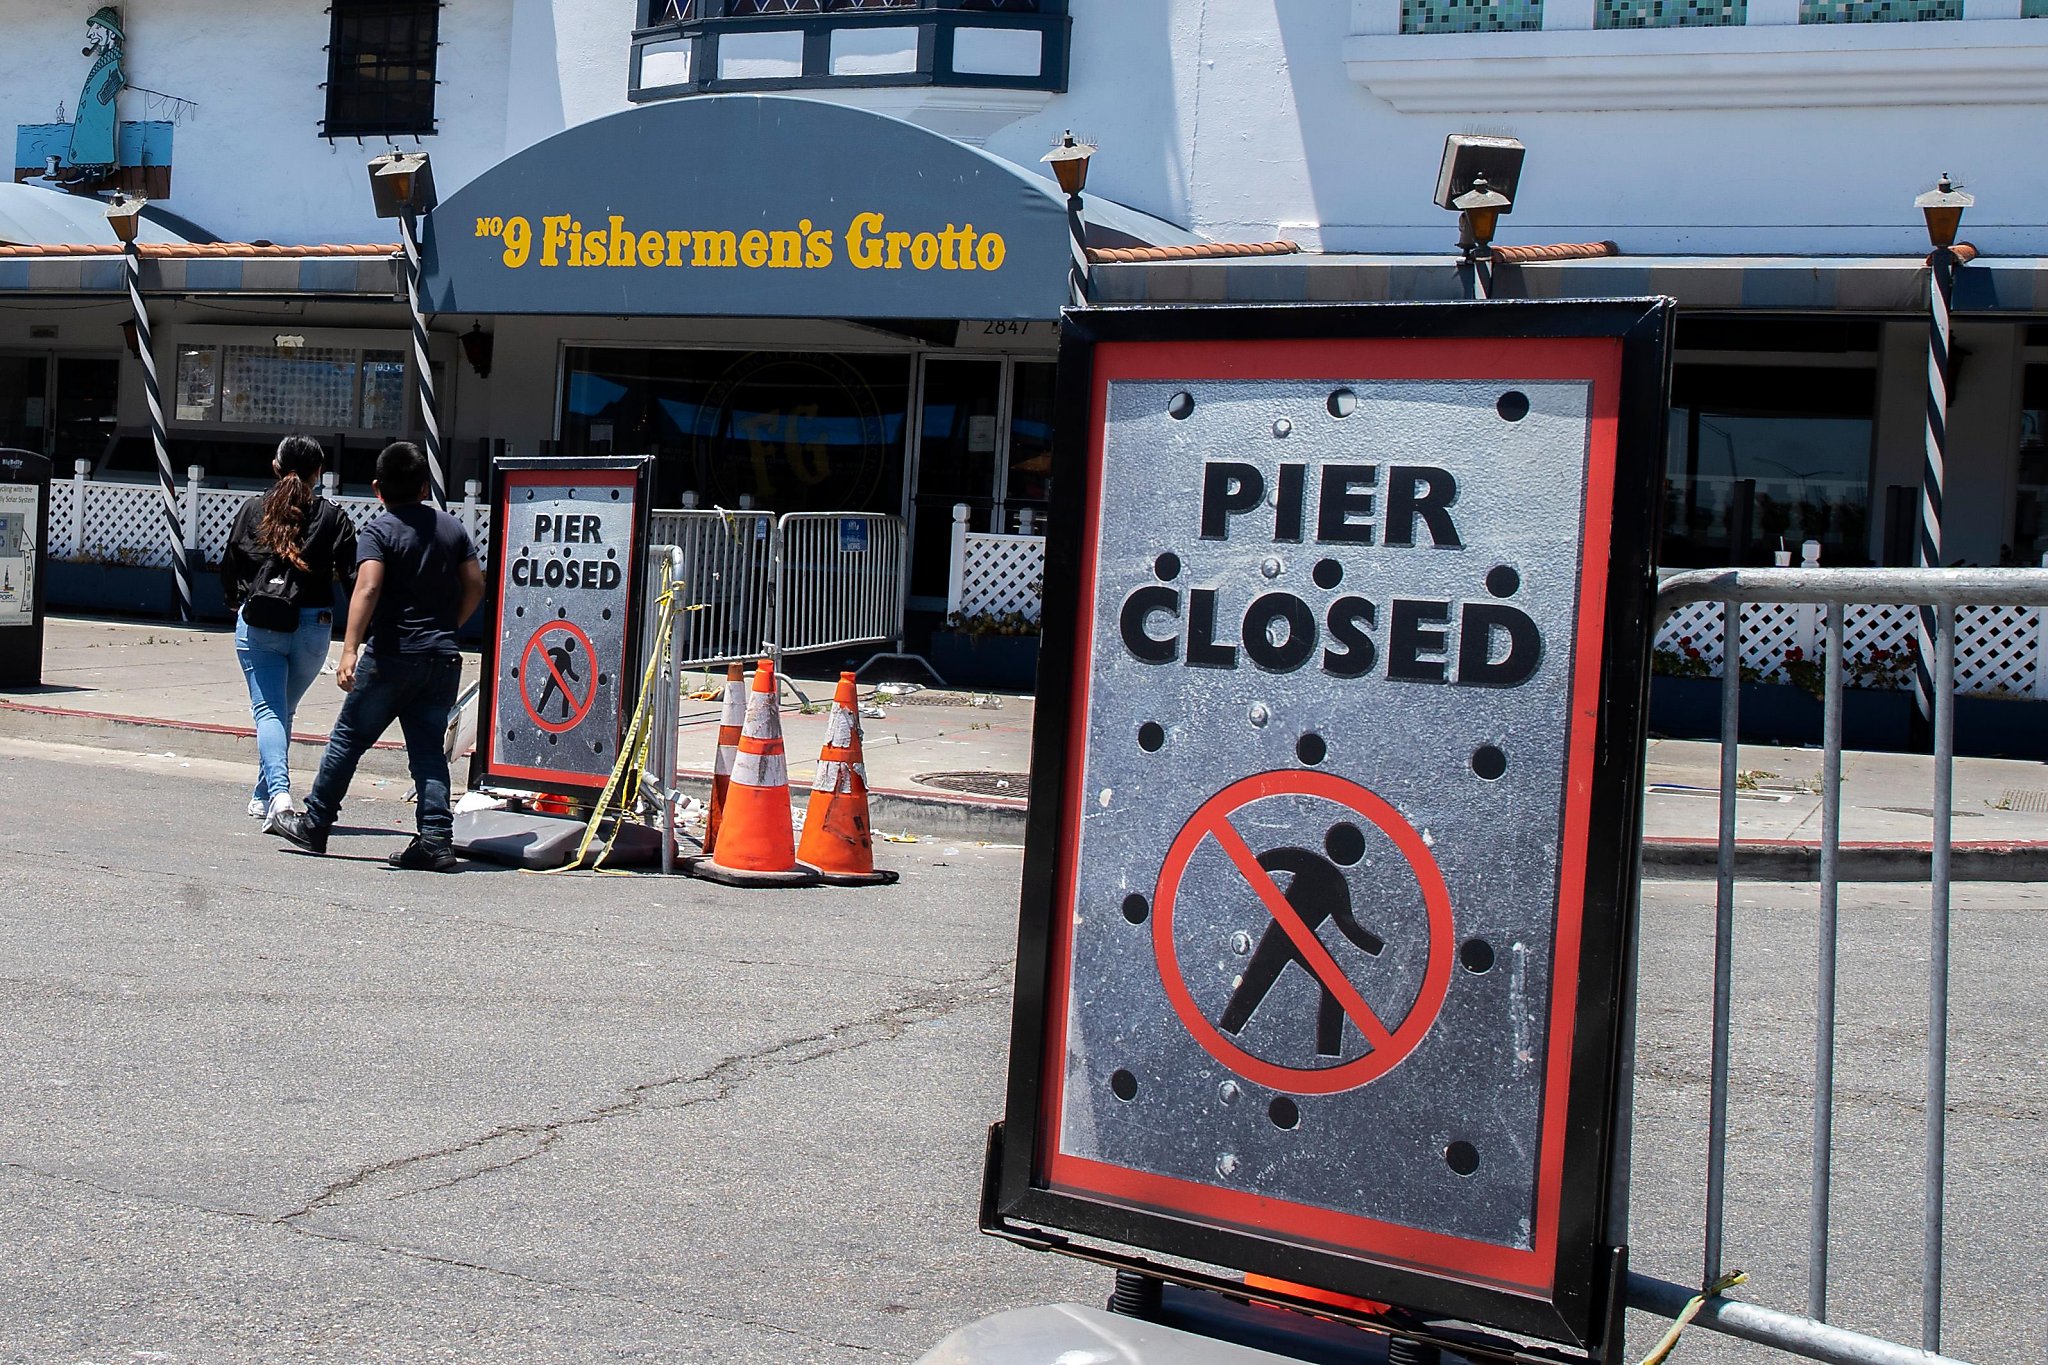 Pier 39, Fisherman's Wharf comeback underway after 87% drop in